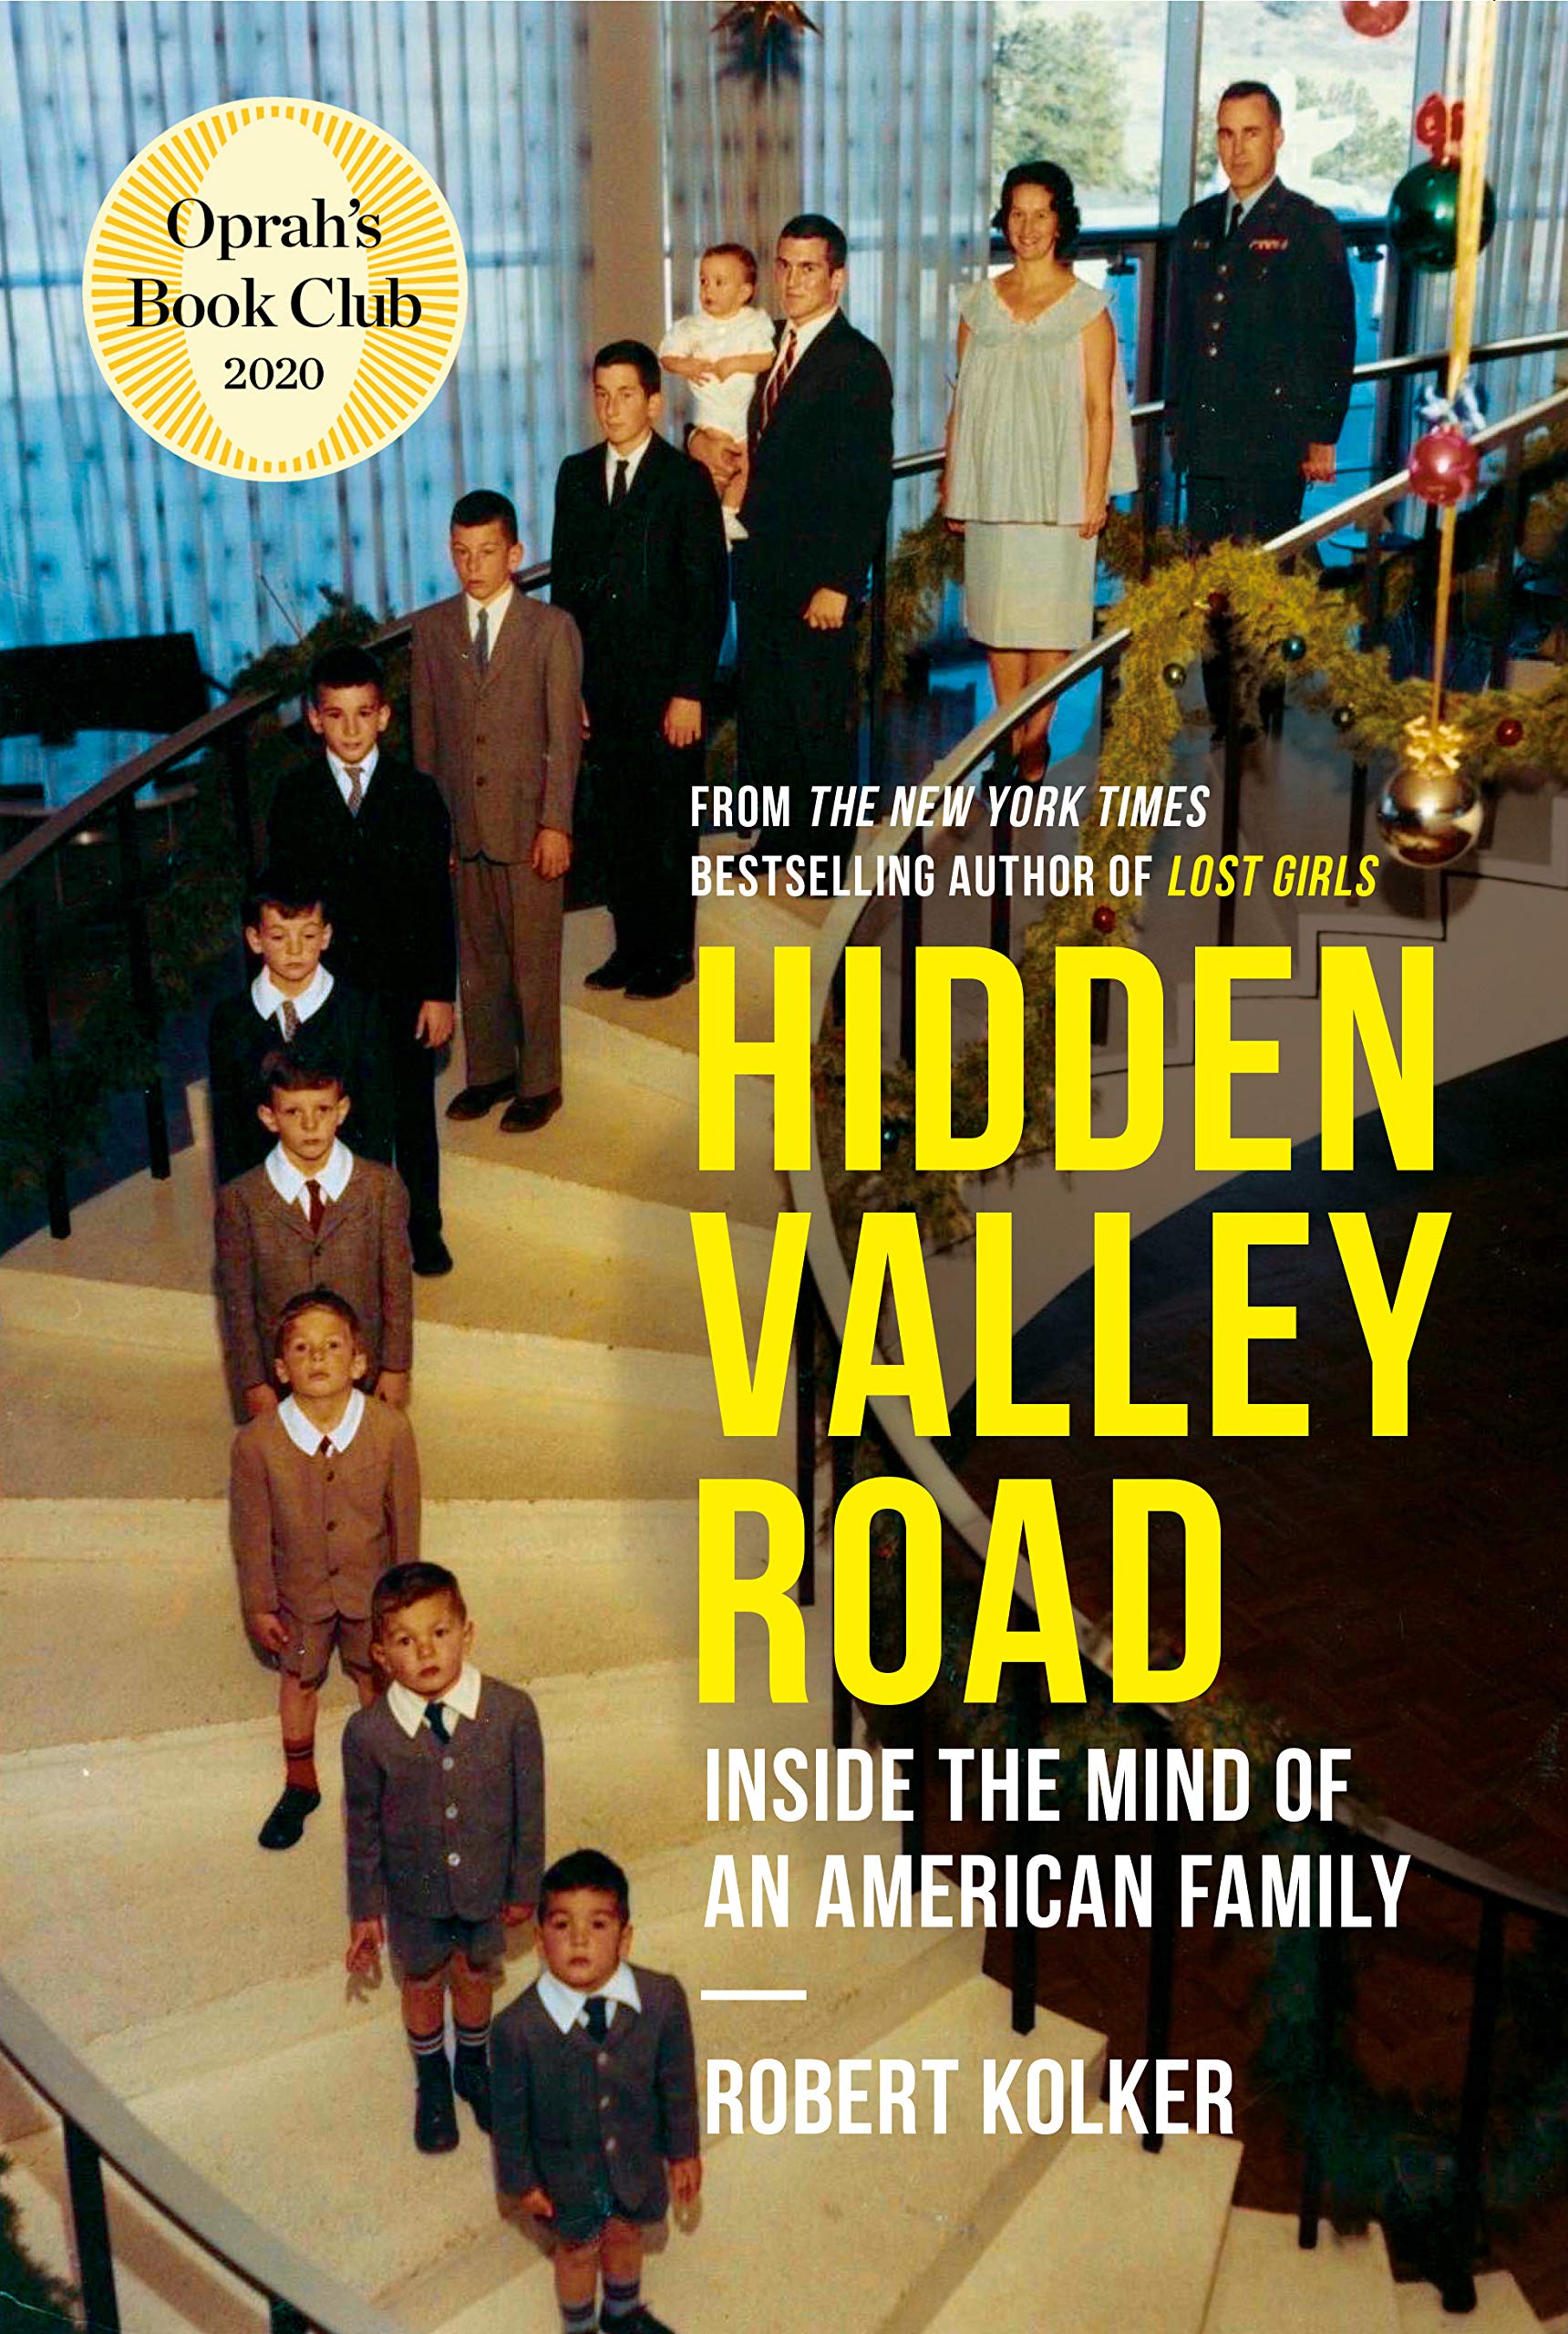 cover for "Hidden Valley Road" by Robert Kolker